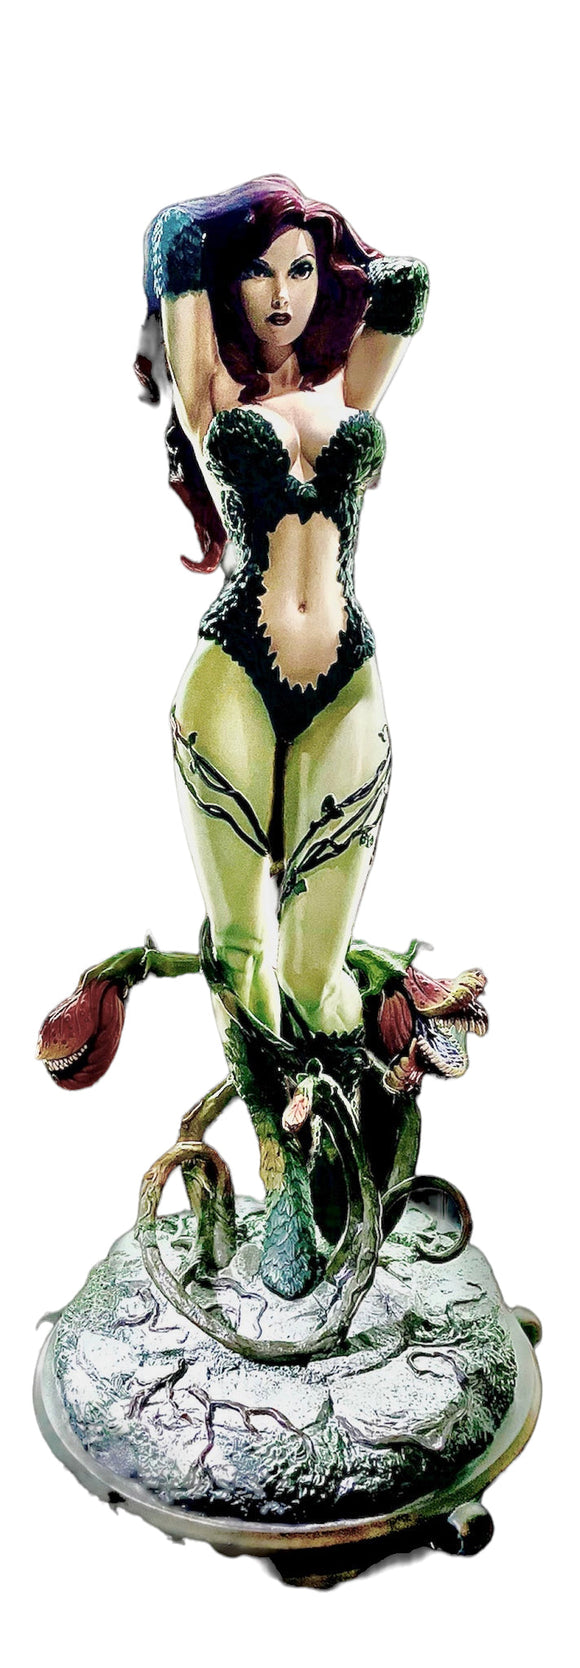 Poison Ivy Sideshow Statue 621/1500 Exclusive Premium Edition Format Figure